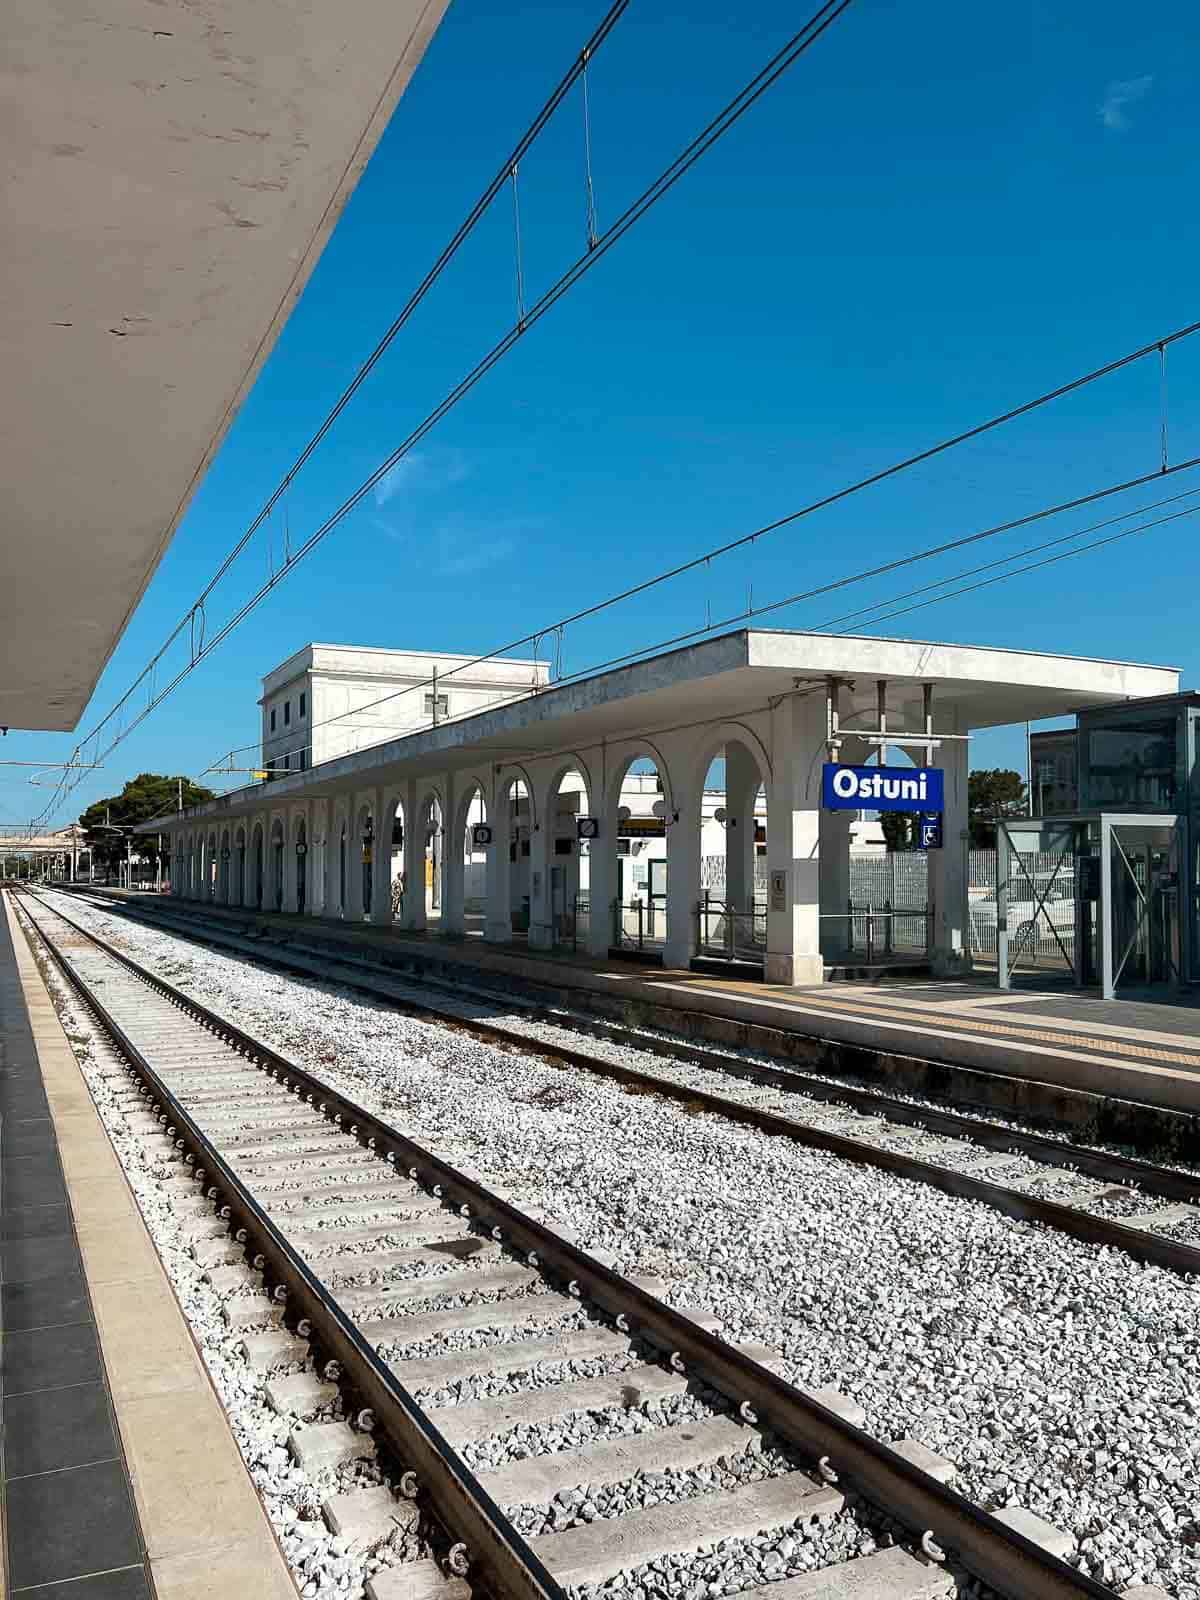 Ostuni train station